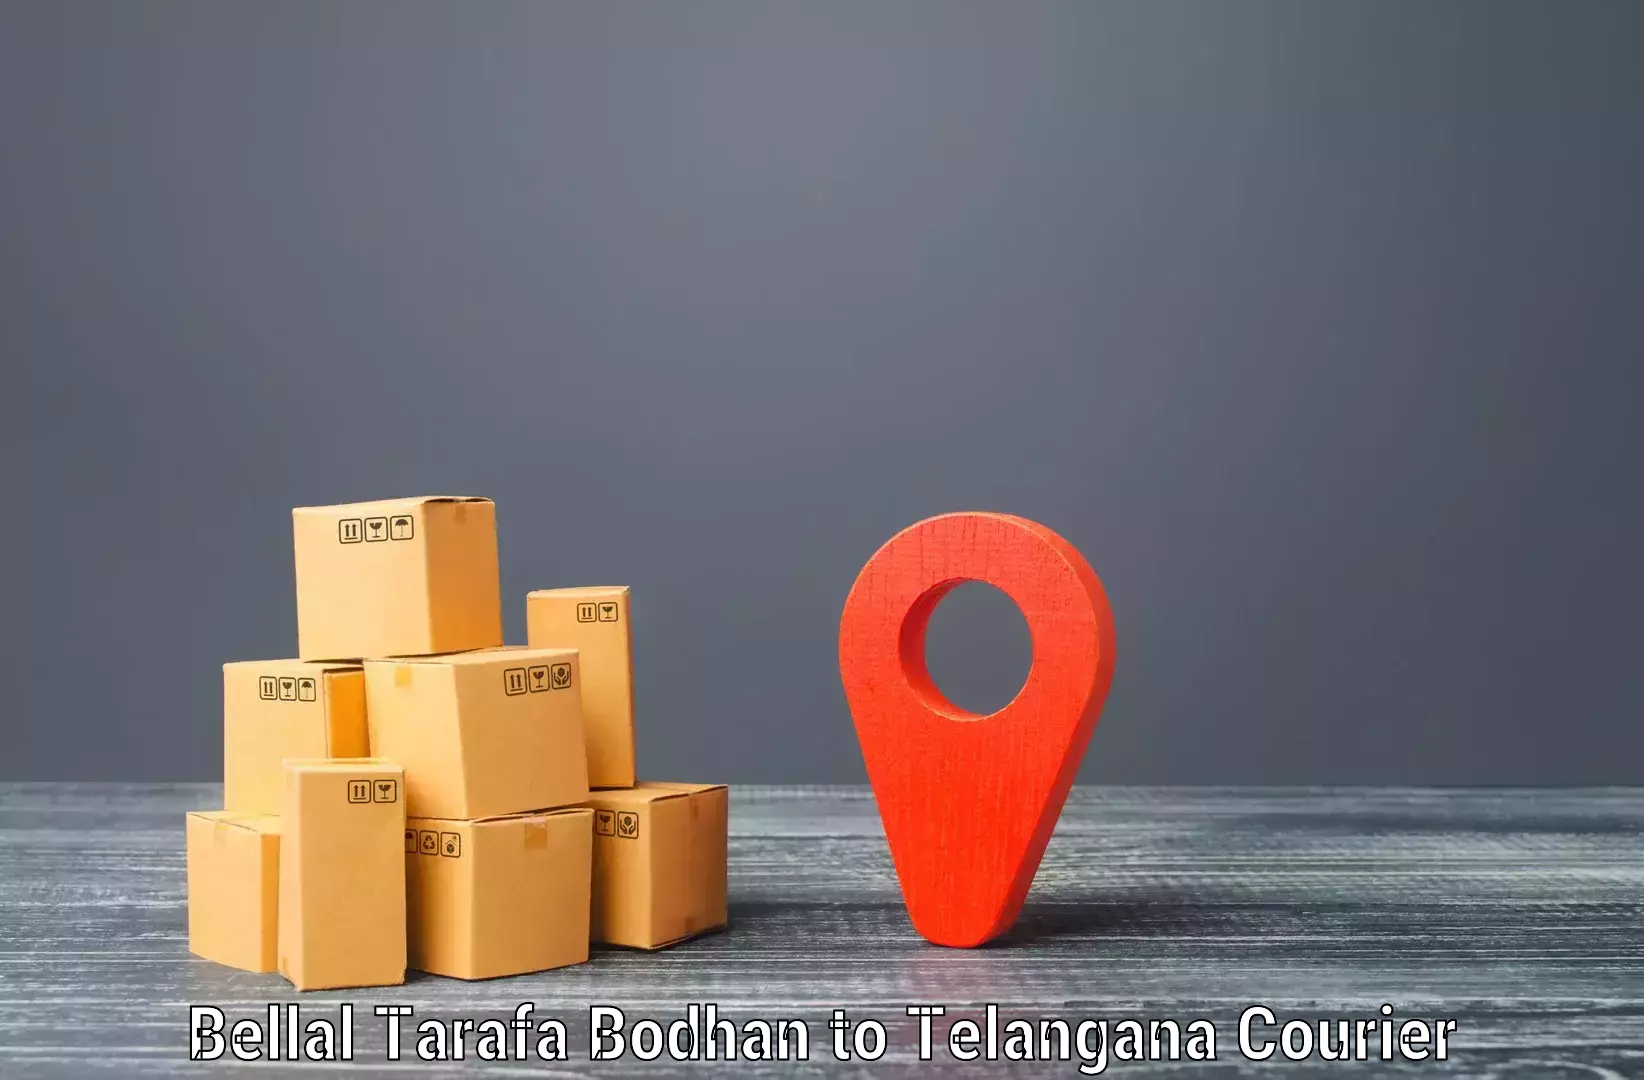 Courier service innovation Bellal Tarafa Bodhan to Mothkur